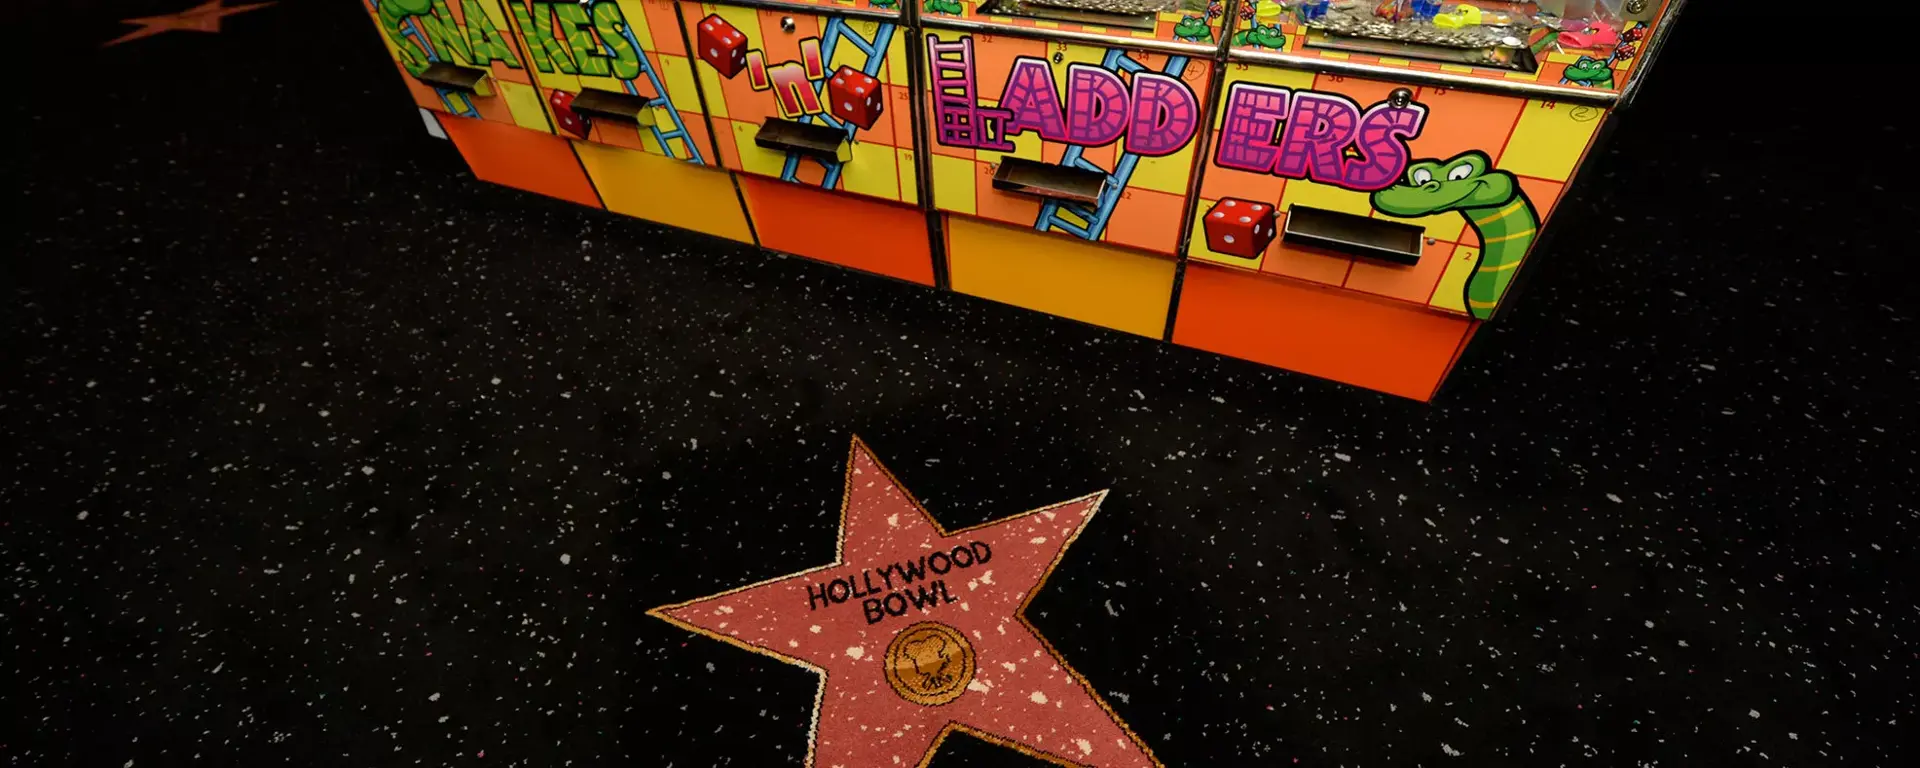 Hollywood Bowl walk of fame star sign